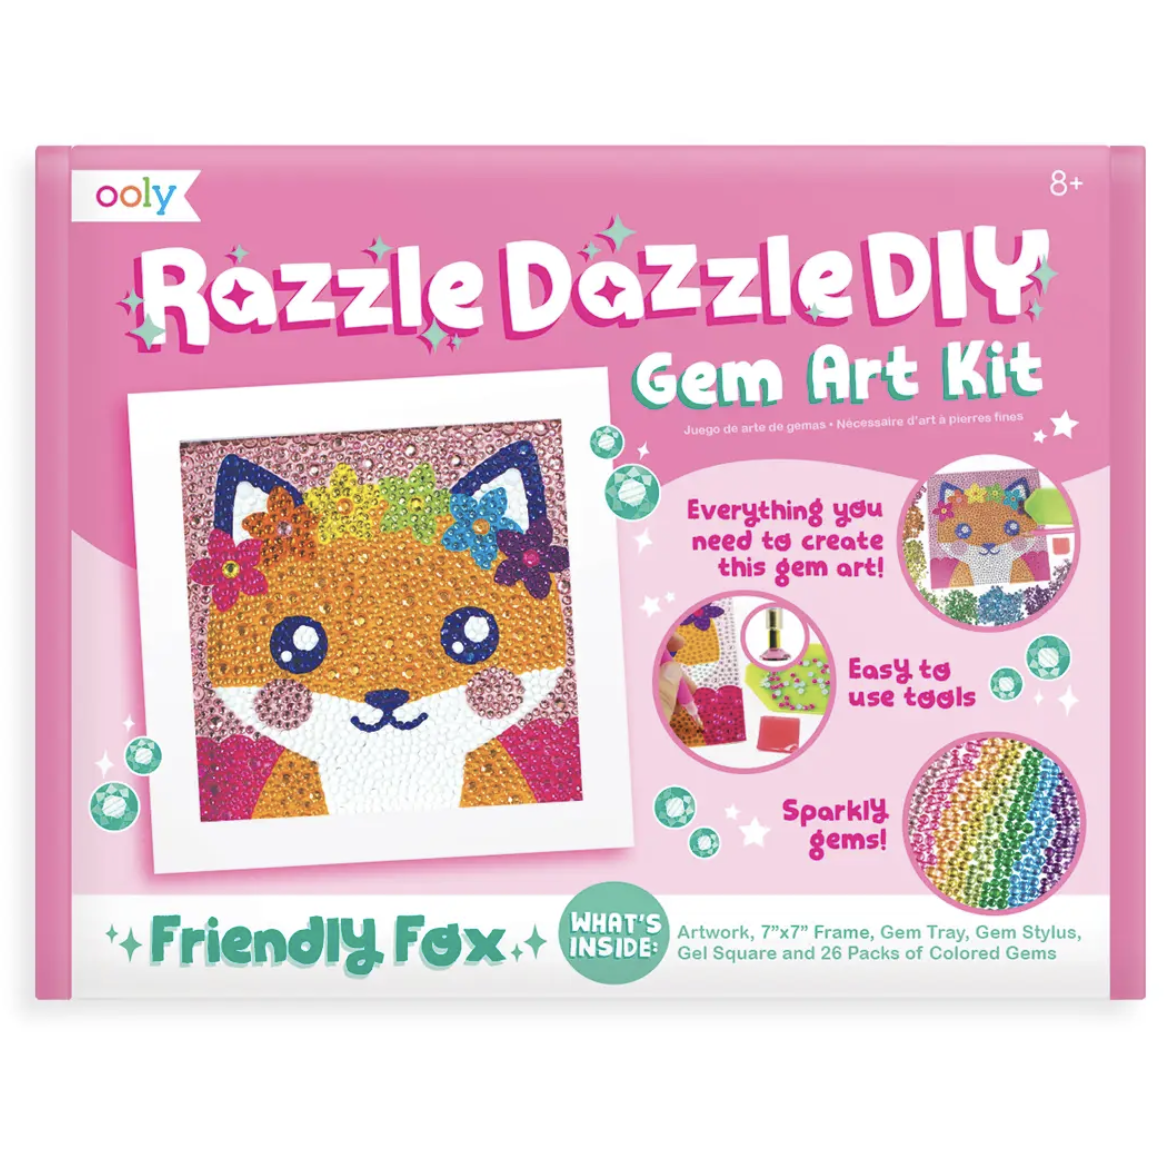 Razzle Dazzle Gem Art Kits